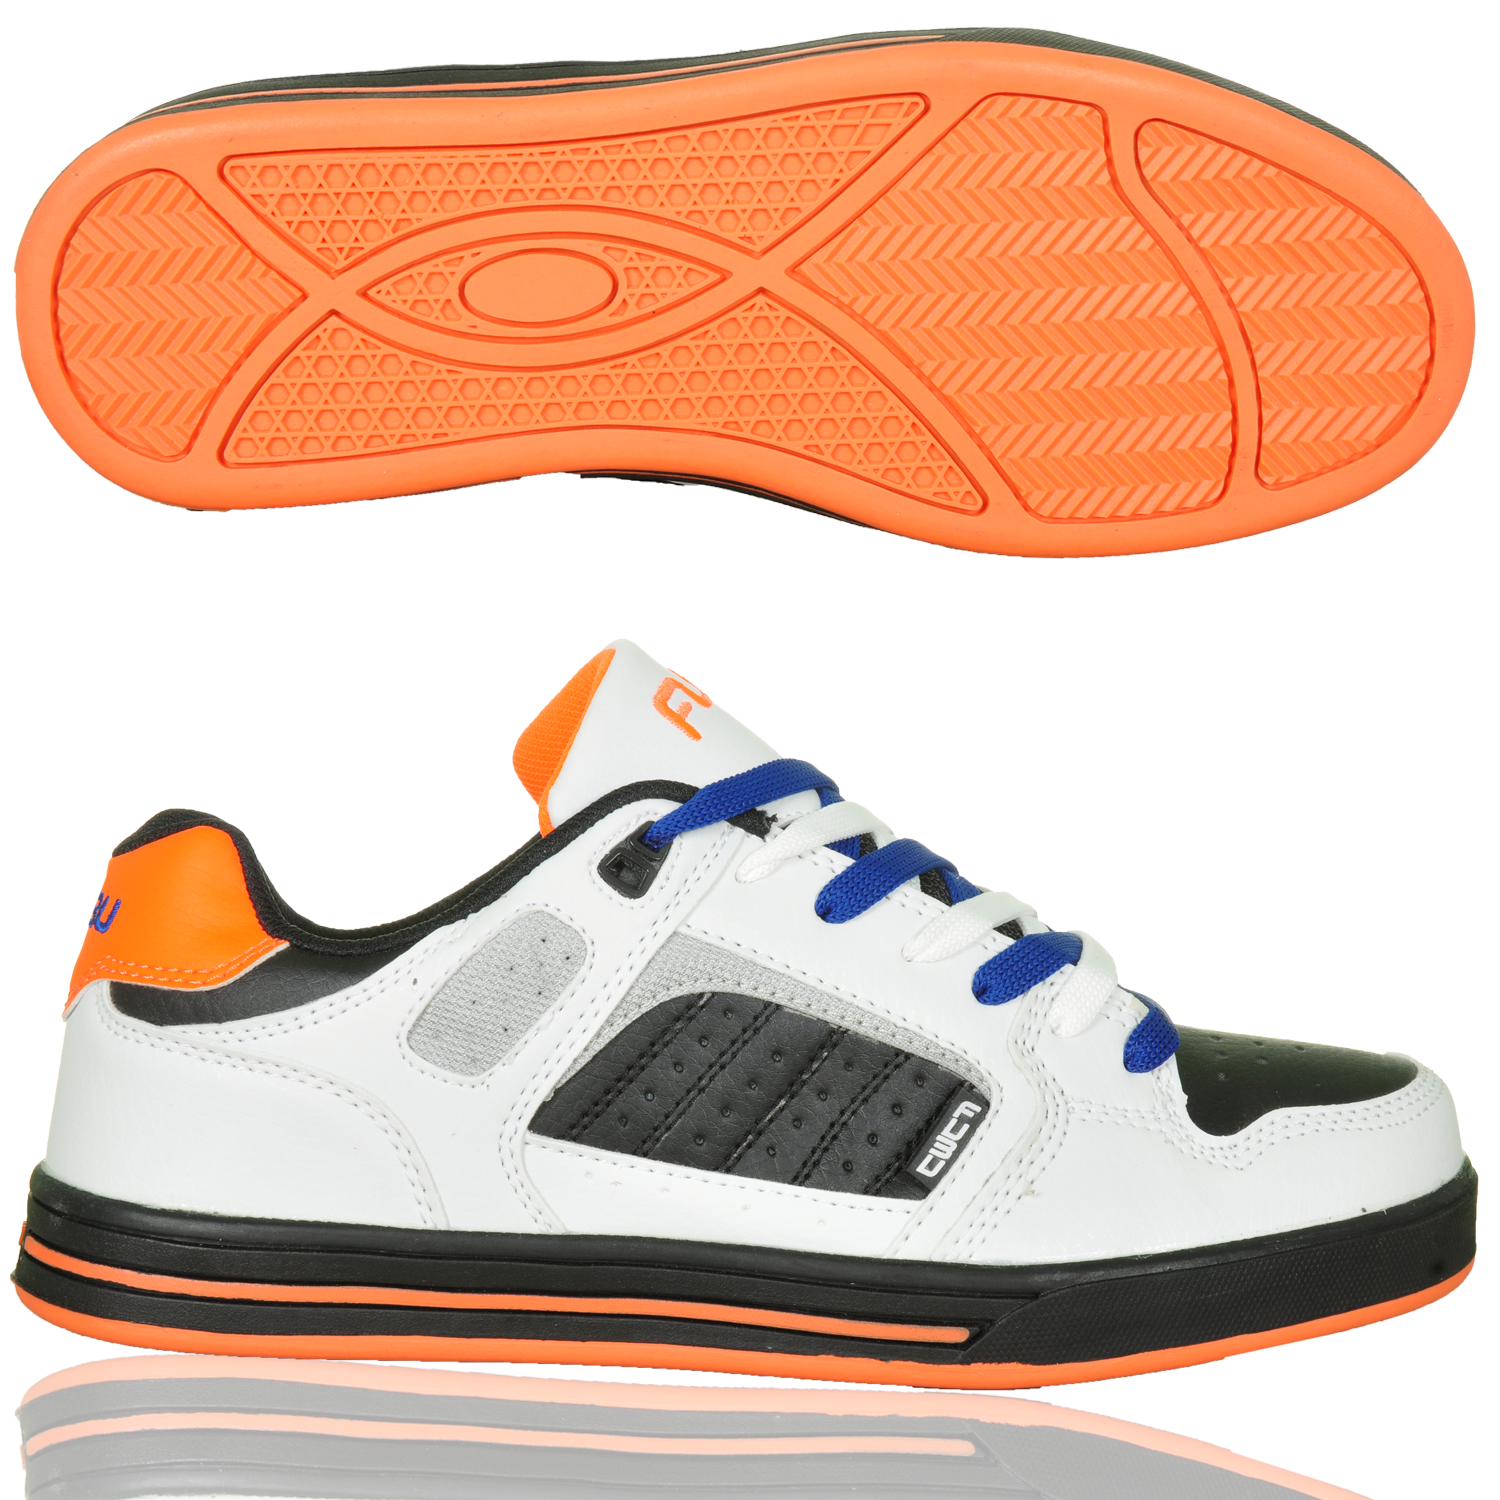 Foto Fubu Shoe Retro Streetwear Lace Hombres Zapatos Skater Blanco Naranja